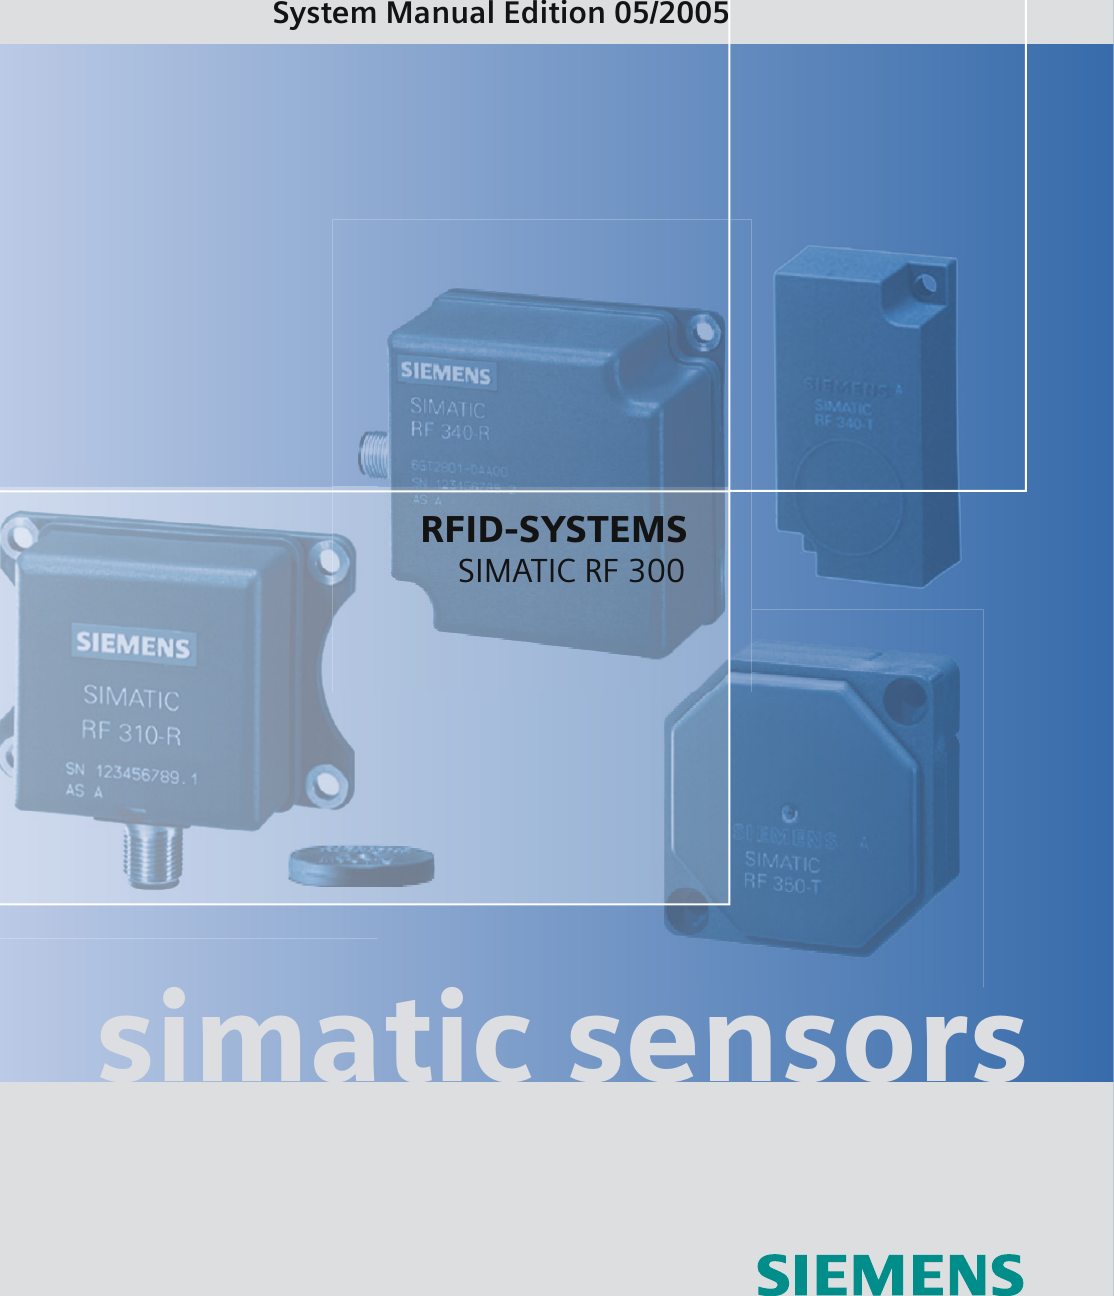 simatic sensorsSystem Manual Edition 05/2005RFID-SYSTEMSSIMATIC RF 300